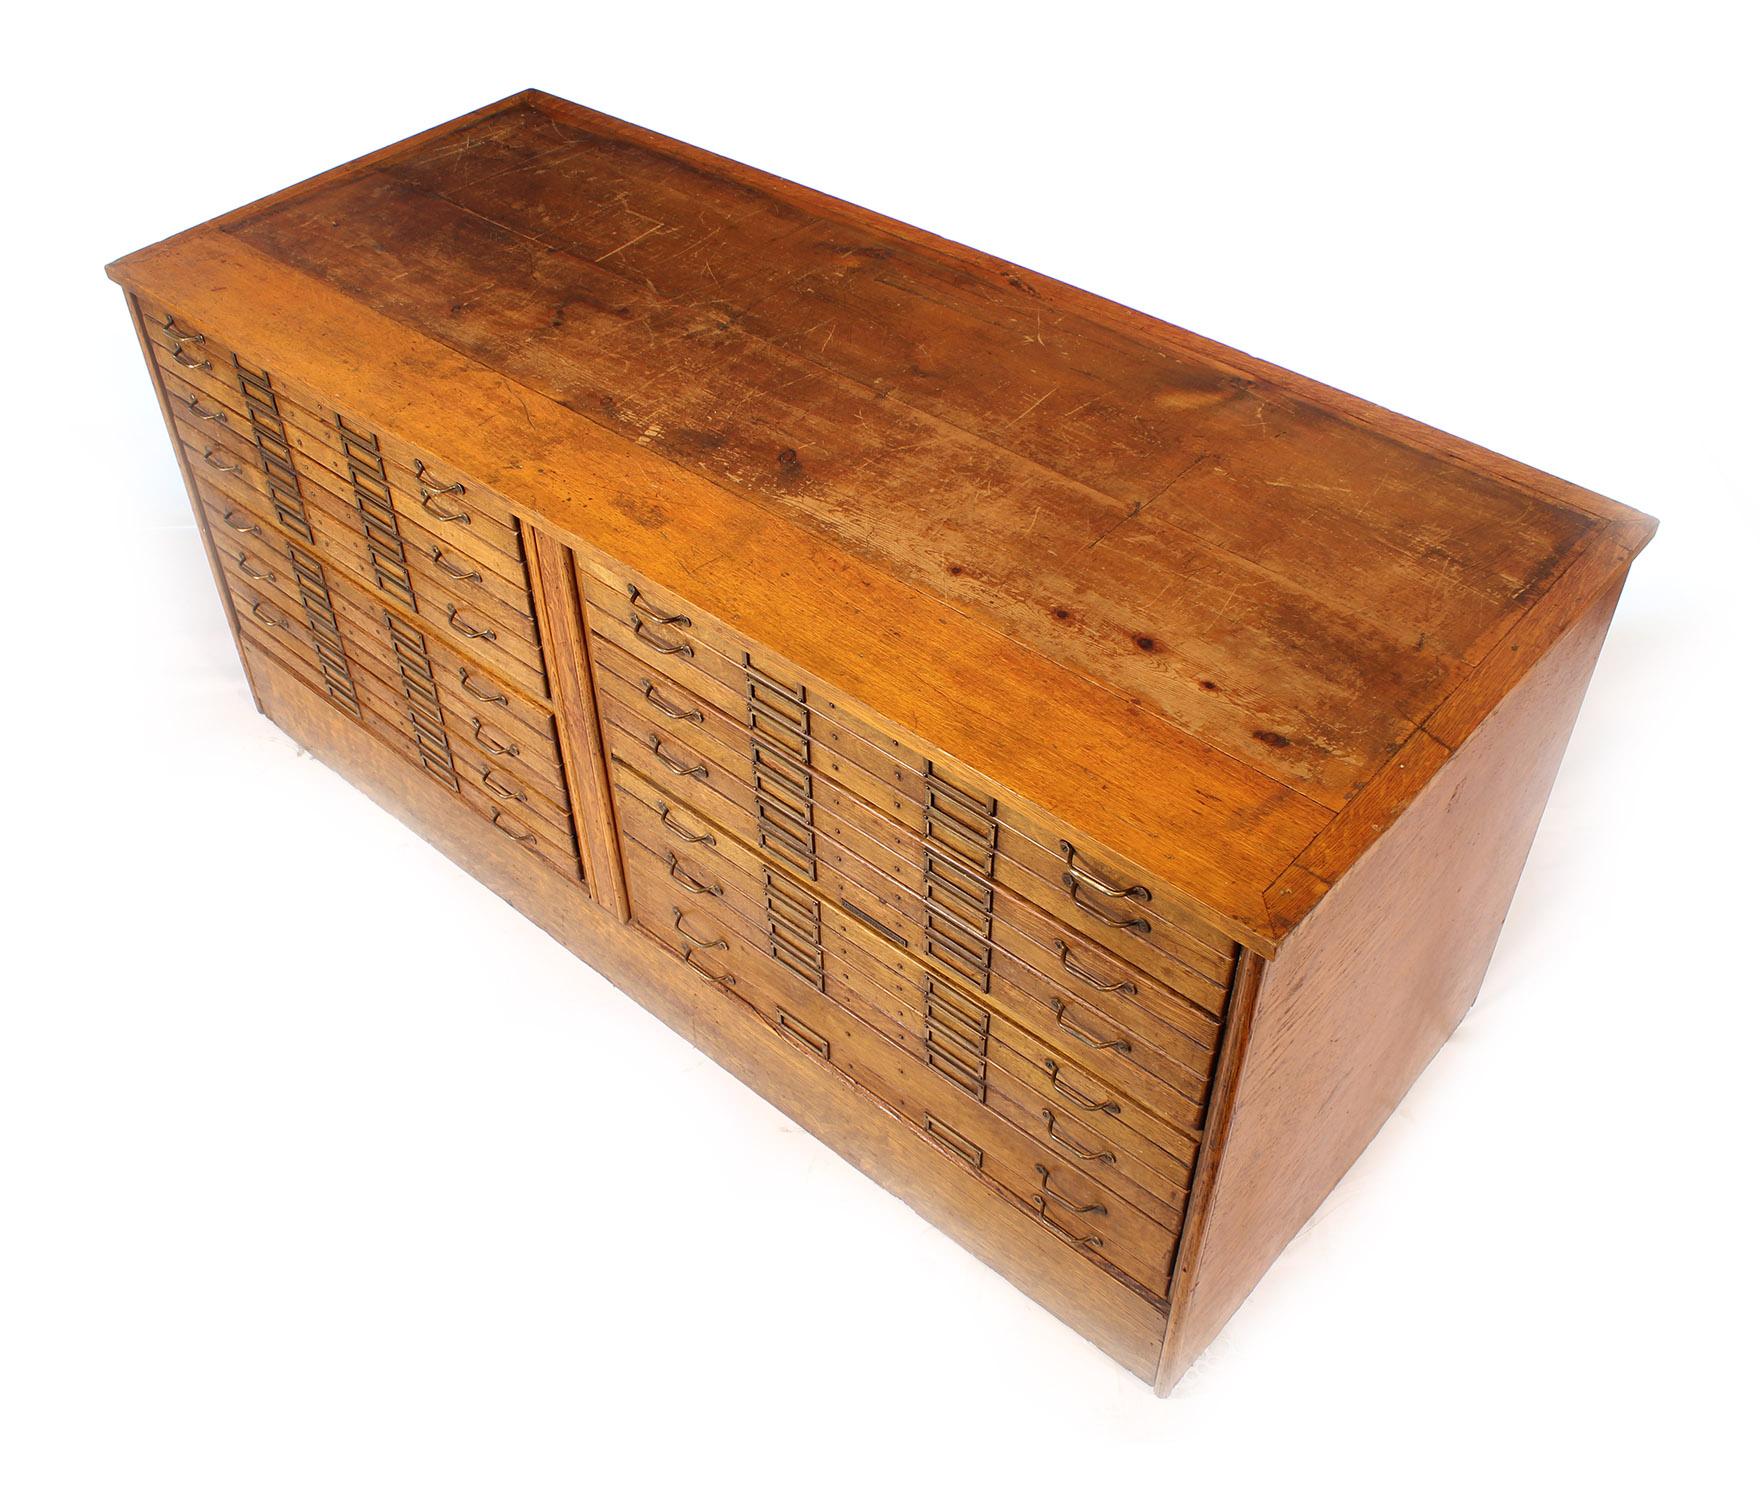 wood flat file cabinet